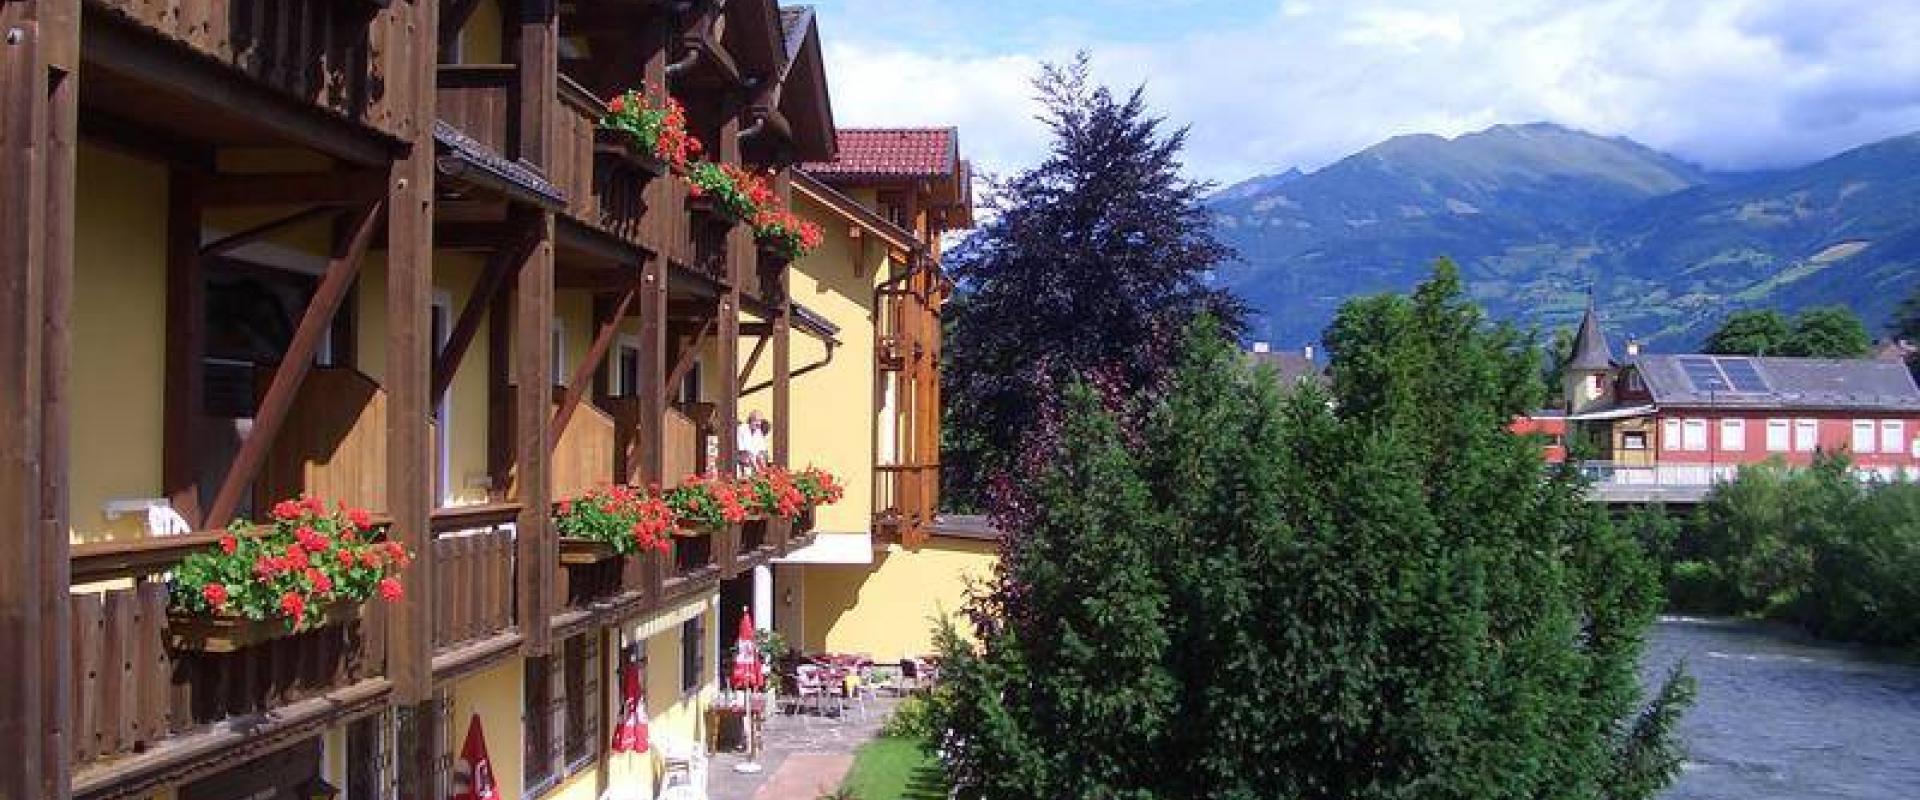 14388 Motorrad Hotel Platzer im Schwarzwald.jpg